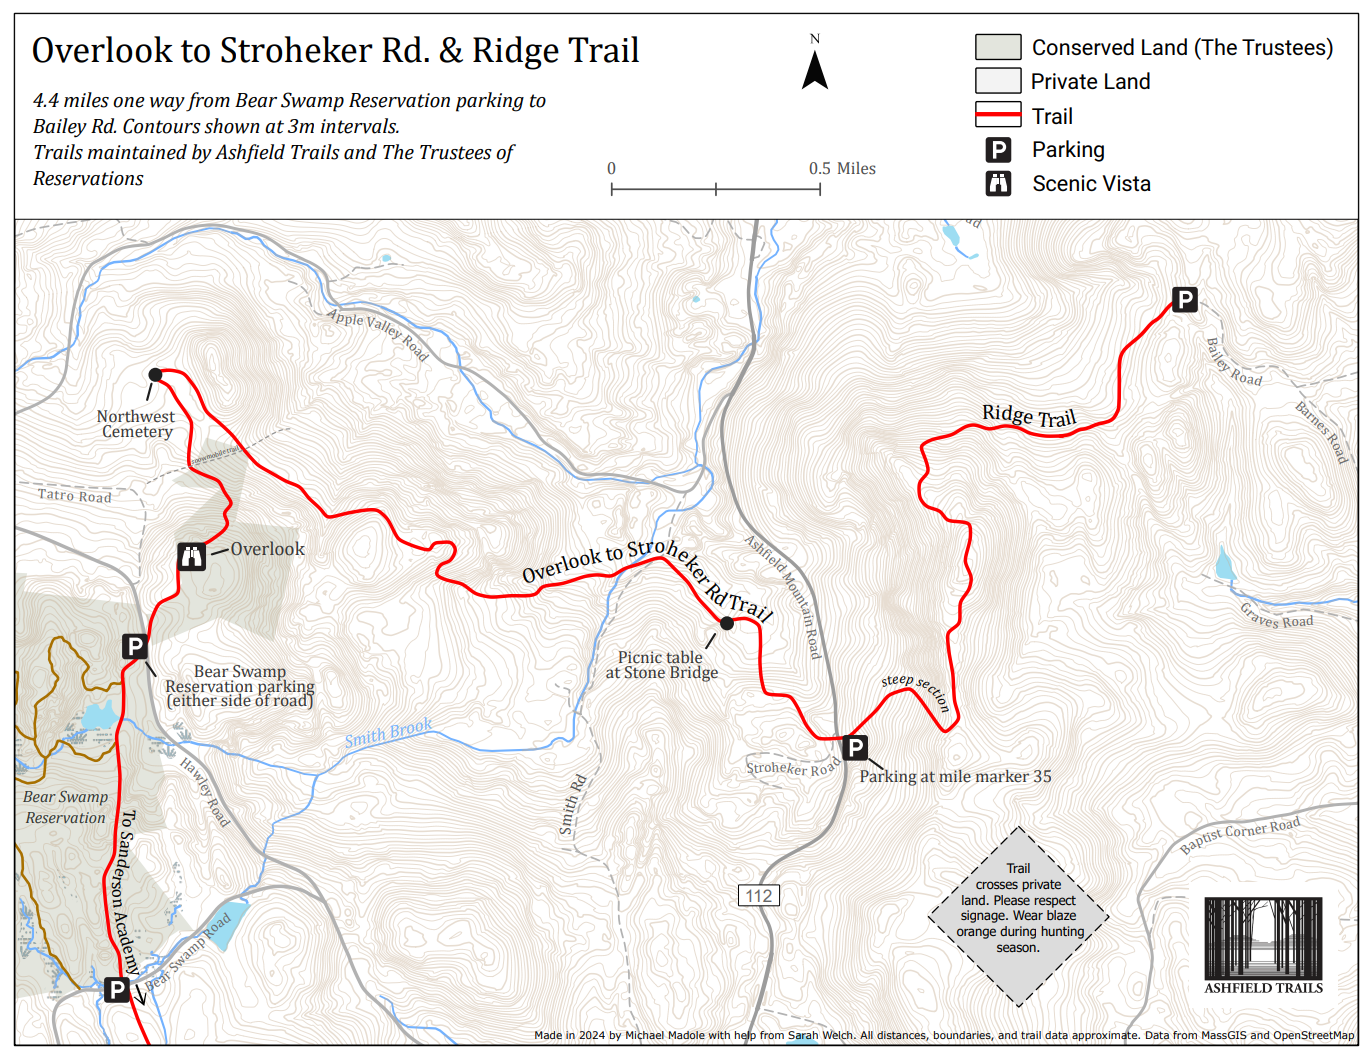 Trail between Bear Swamp, Overlook, Northwest Cemetery, Stone Bridge, and Ridge